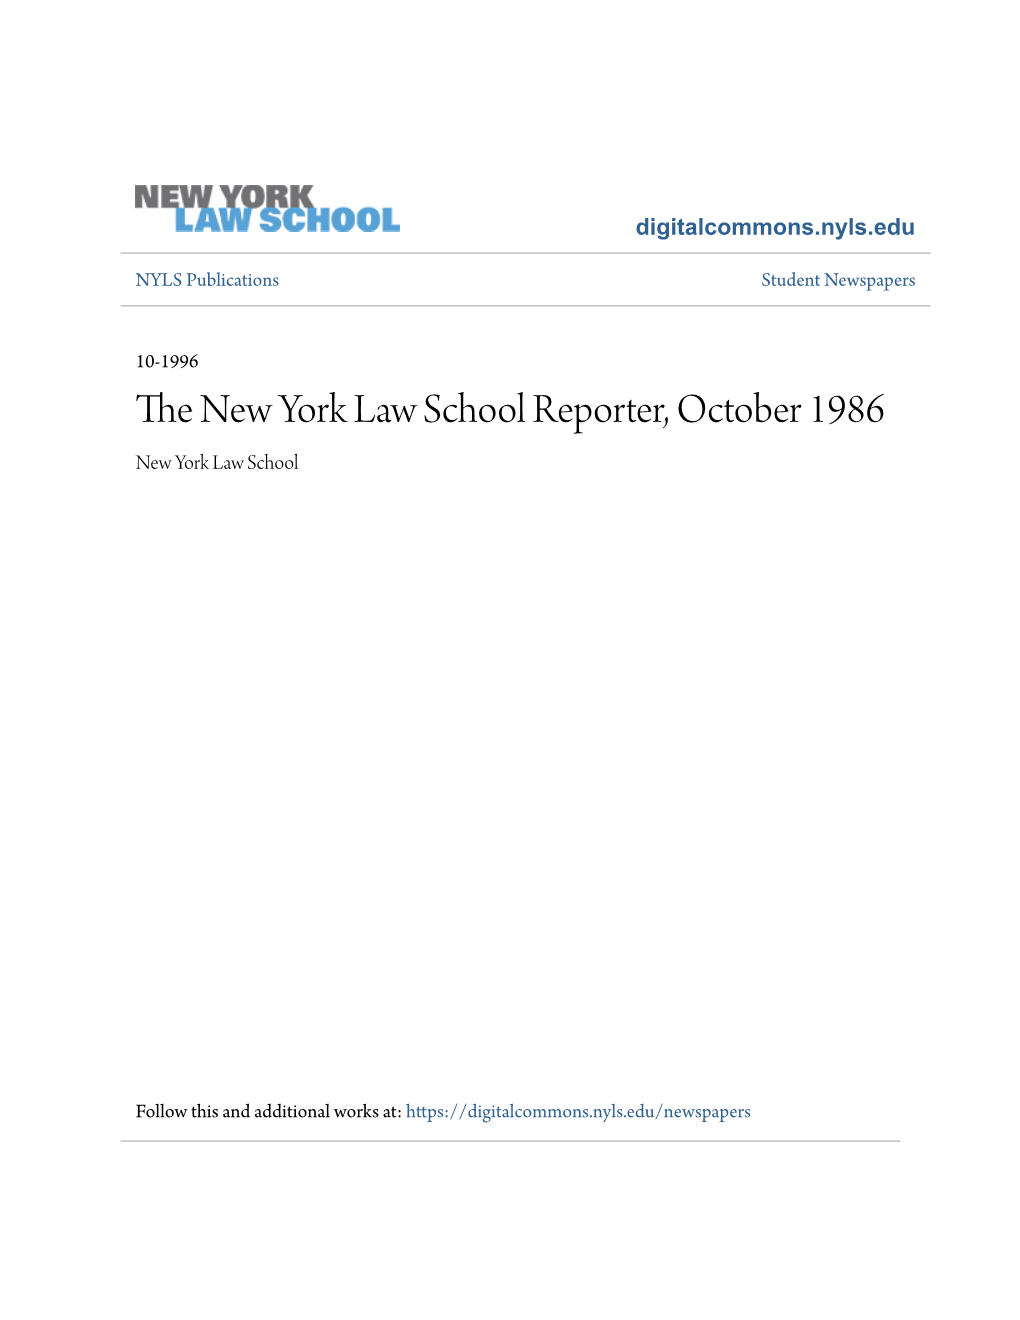 The New York Law School Reporter, October 1986